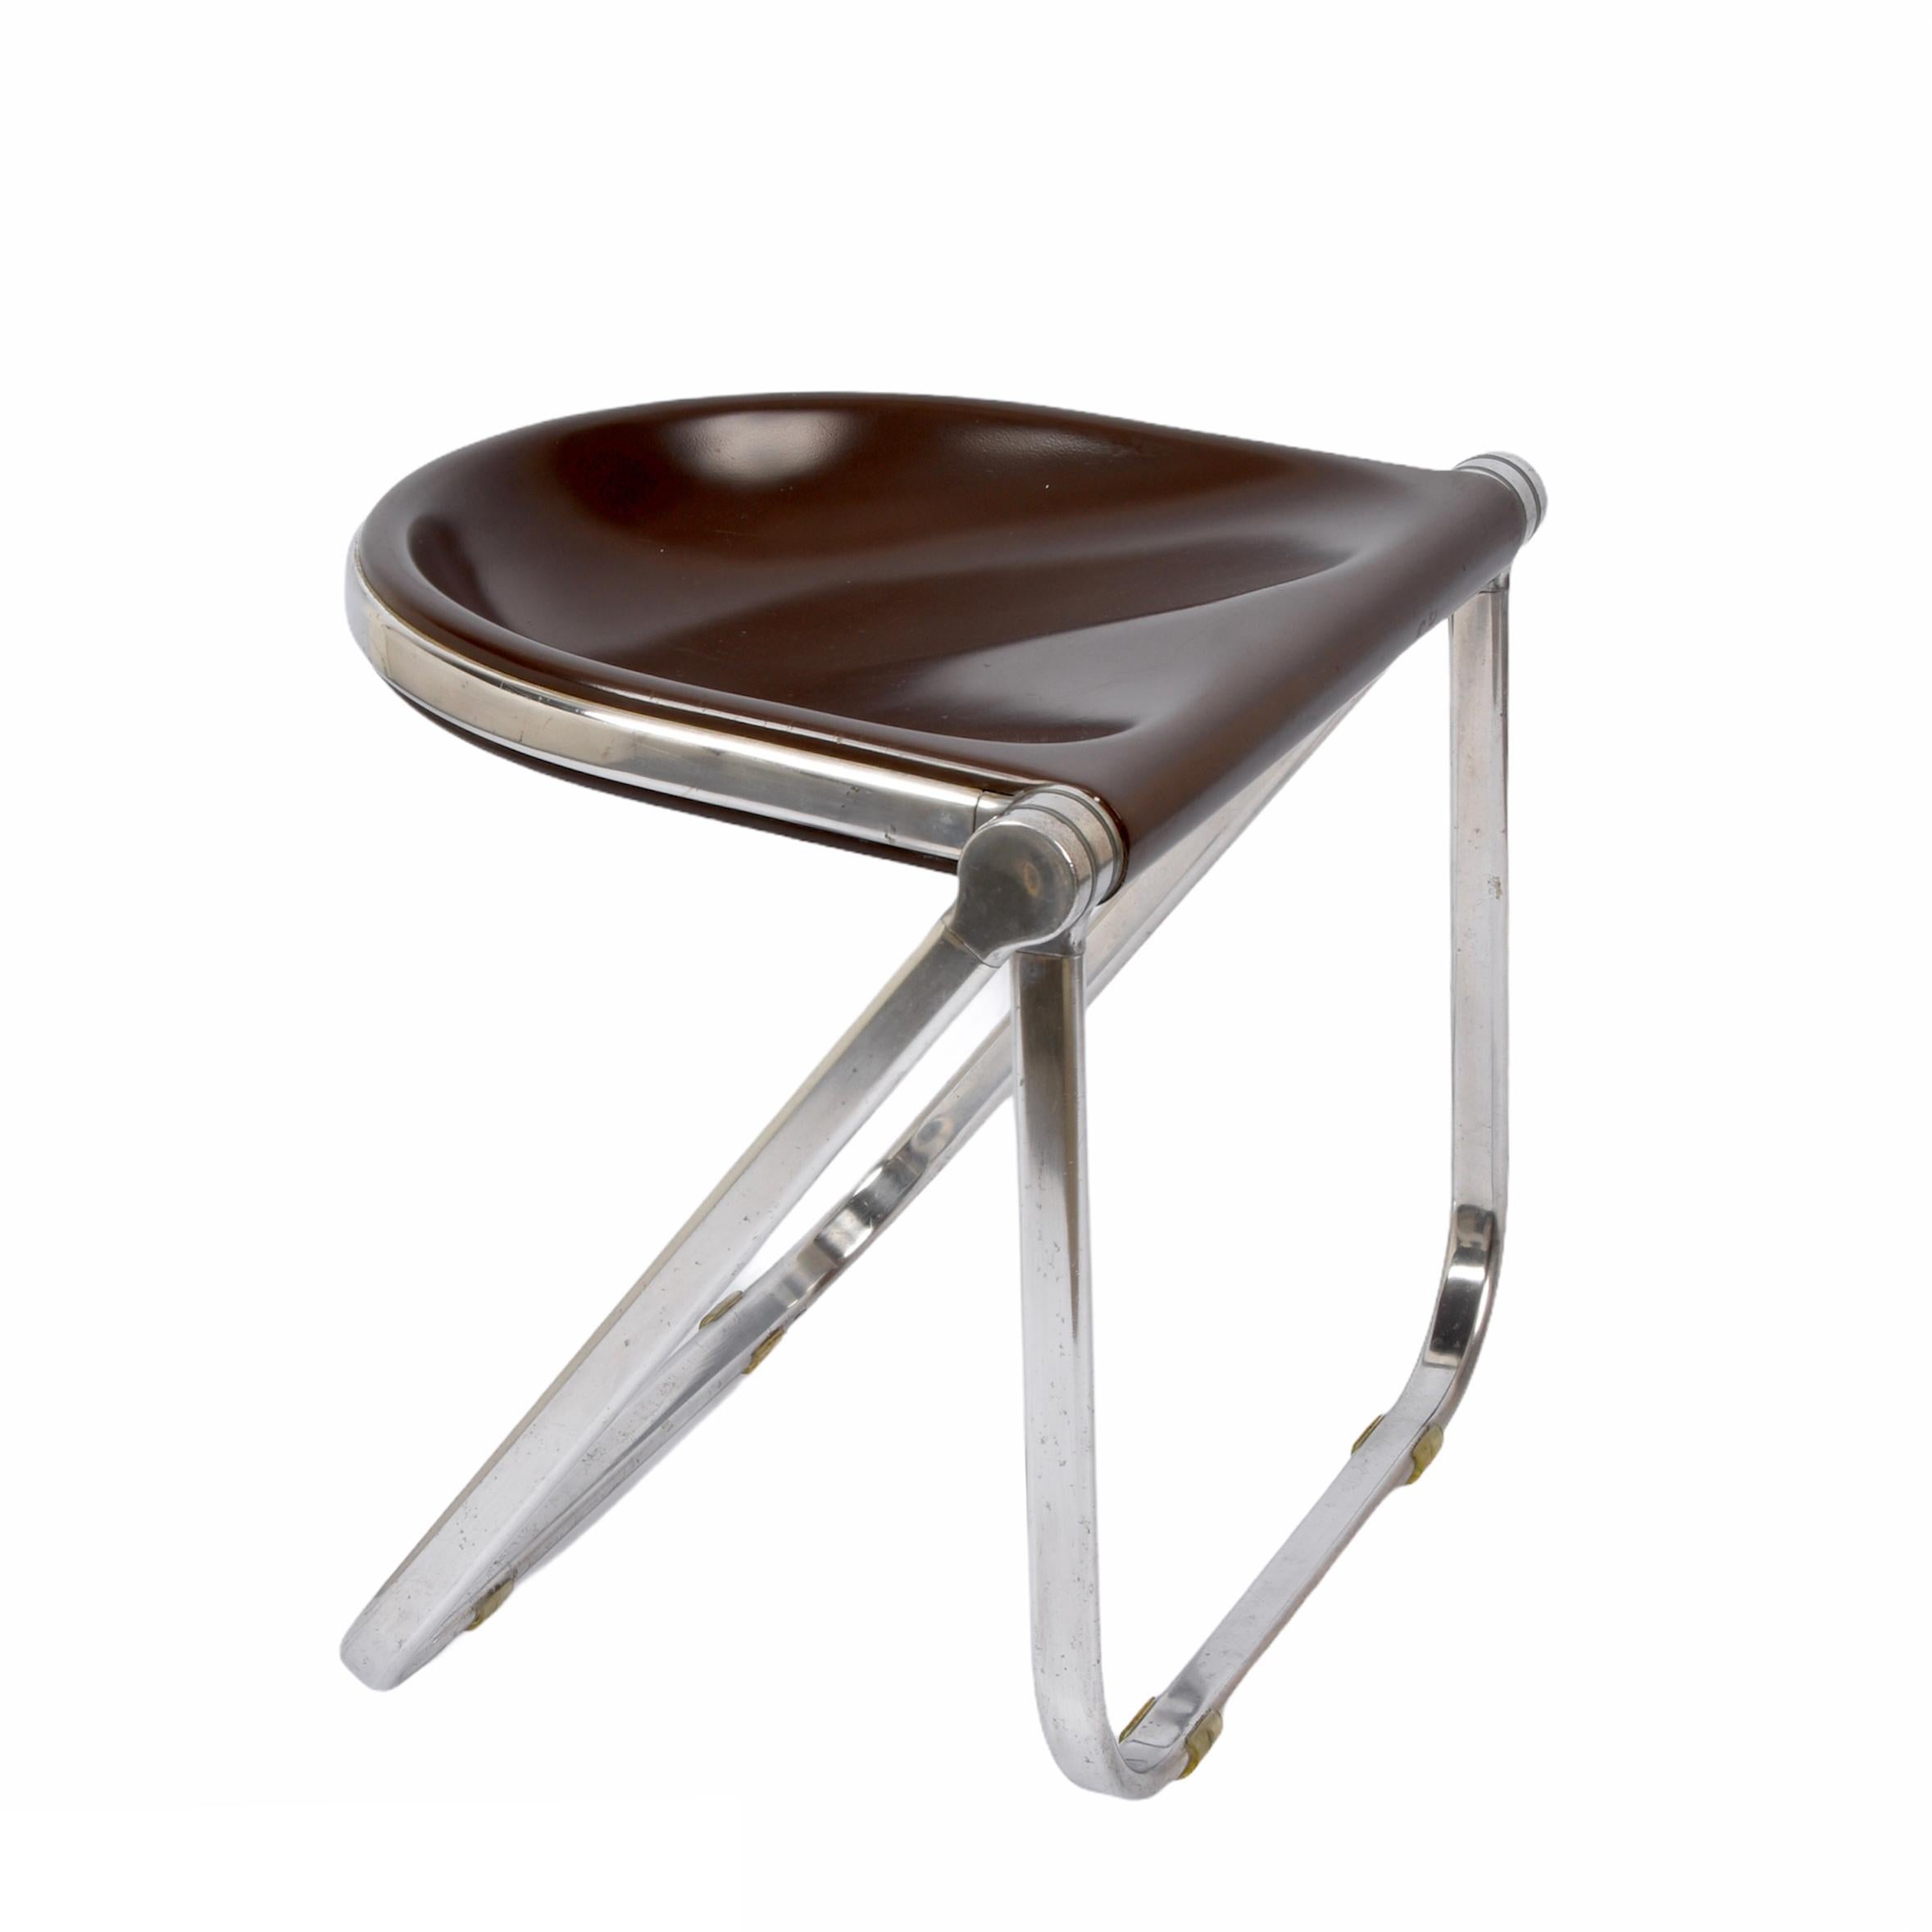 Incredible folding stool in chromed aluminium laminate and brown hard plastic. This super rare model, called 